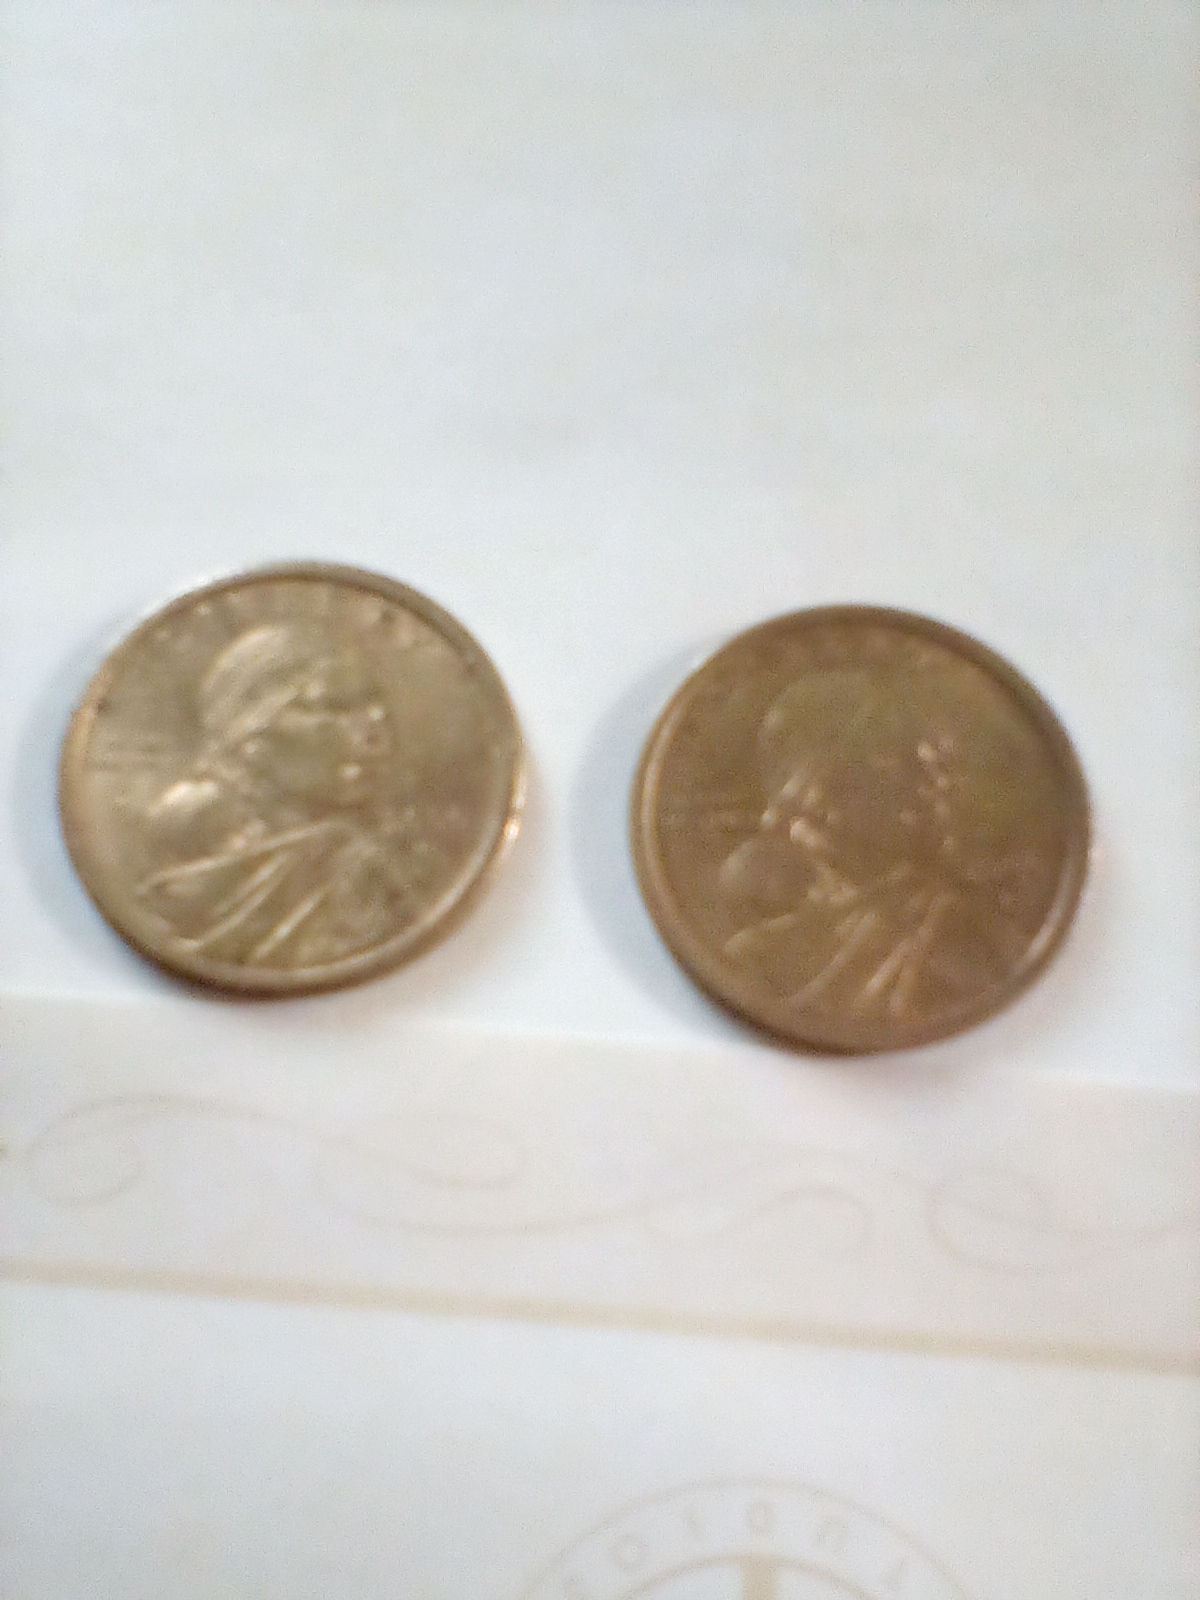 Sacagawea Coin front